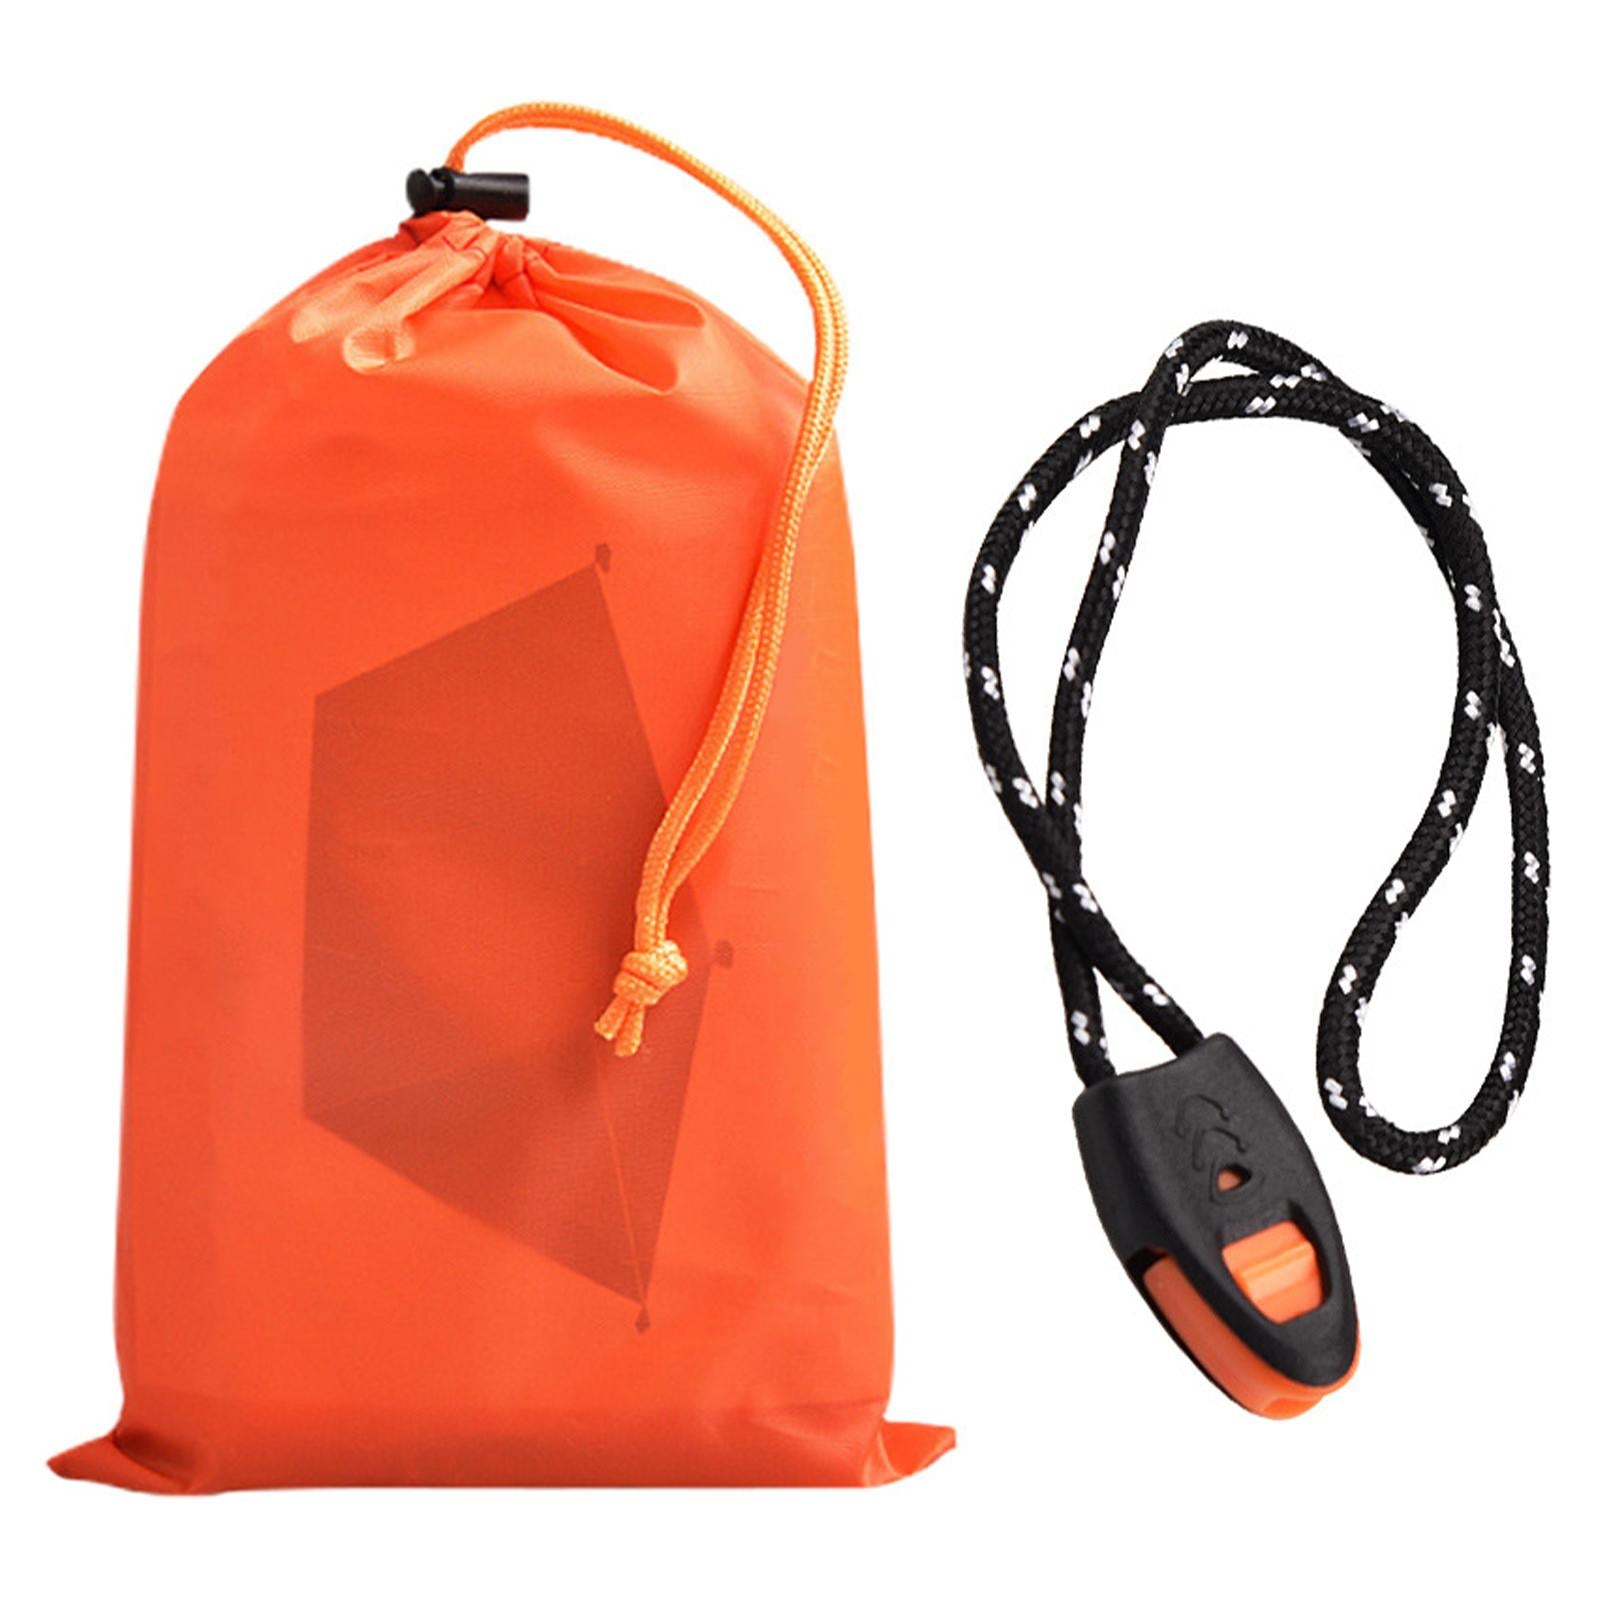 Sleeping Bag, Thermal Sack Blanket, Waterproof Lightweight, Portable Sack for Camping Hiking Outdoor Adventure Activities